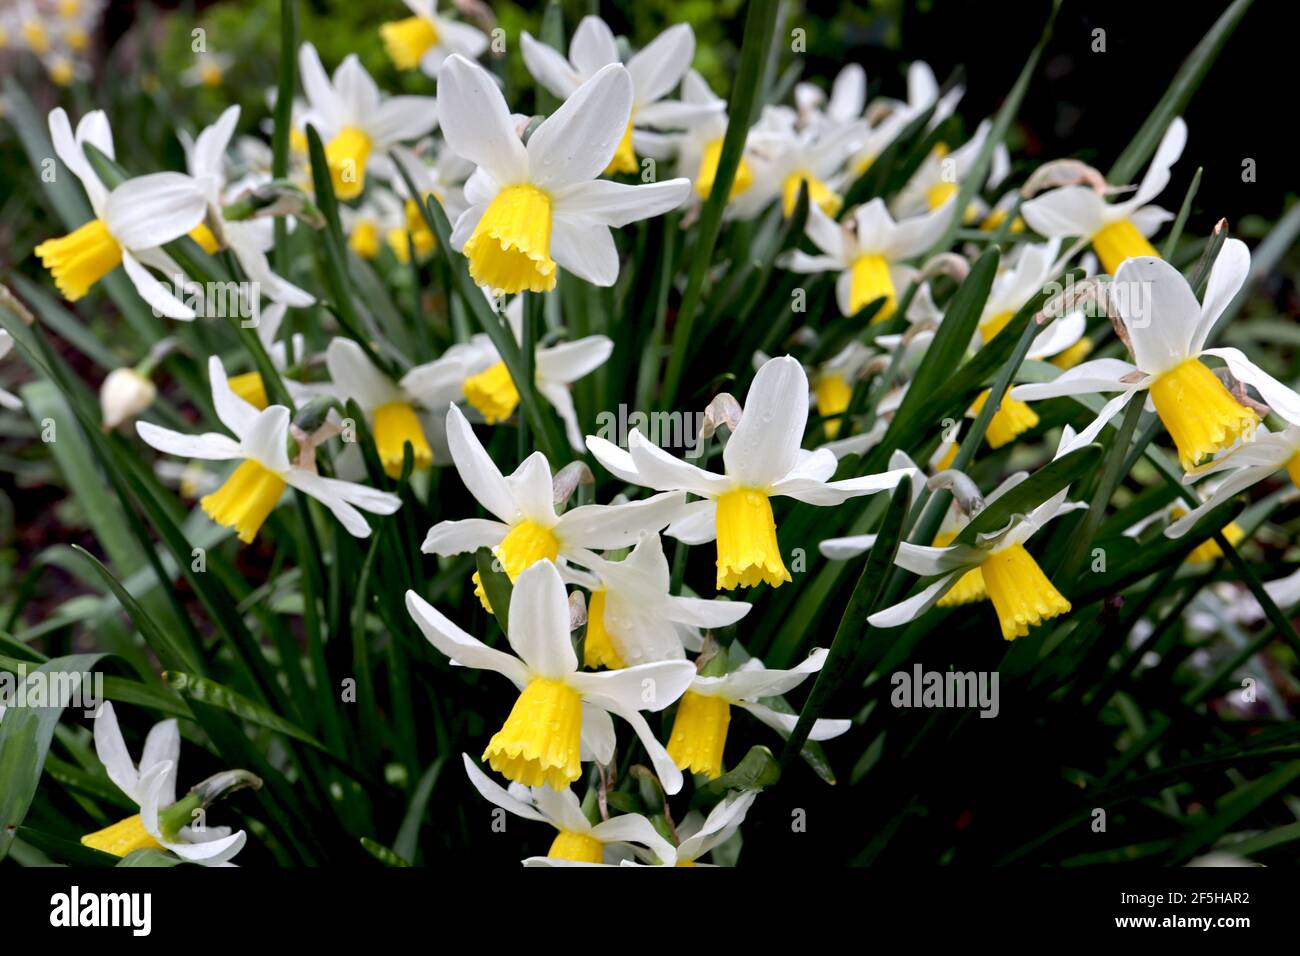 Narcisse 'Trena' / Daffodil Trena Division 6 Cyclamineus daffodils jonquilles avec pétales blancs balayés et longues trompettes jaunes, mars, Angleterre, Banque D'Images